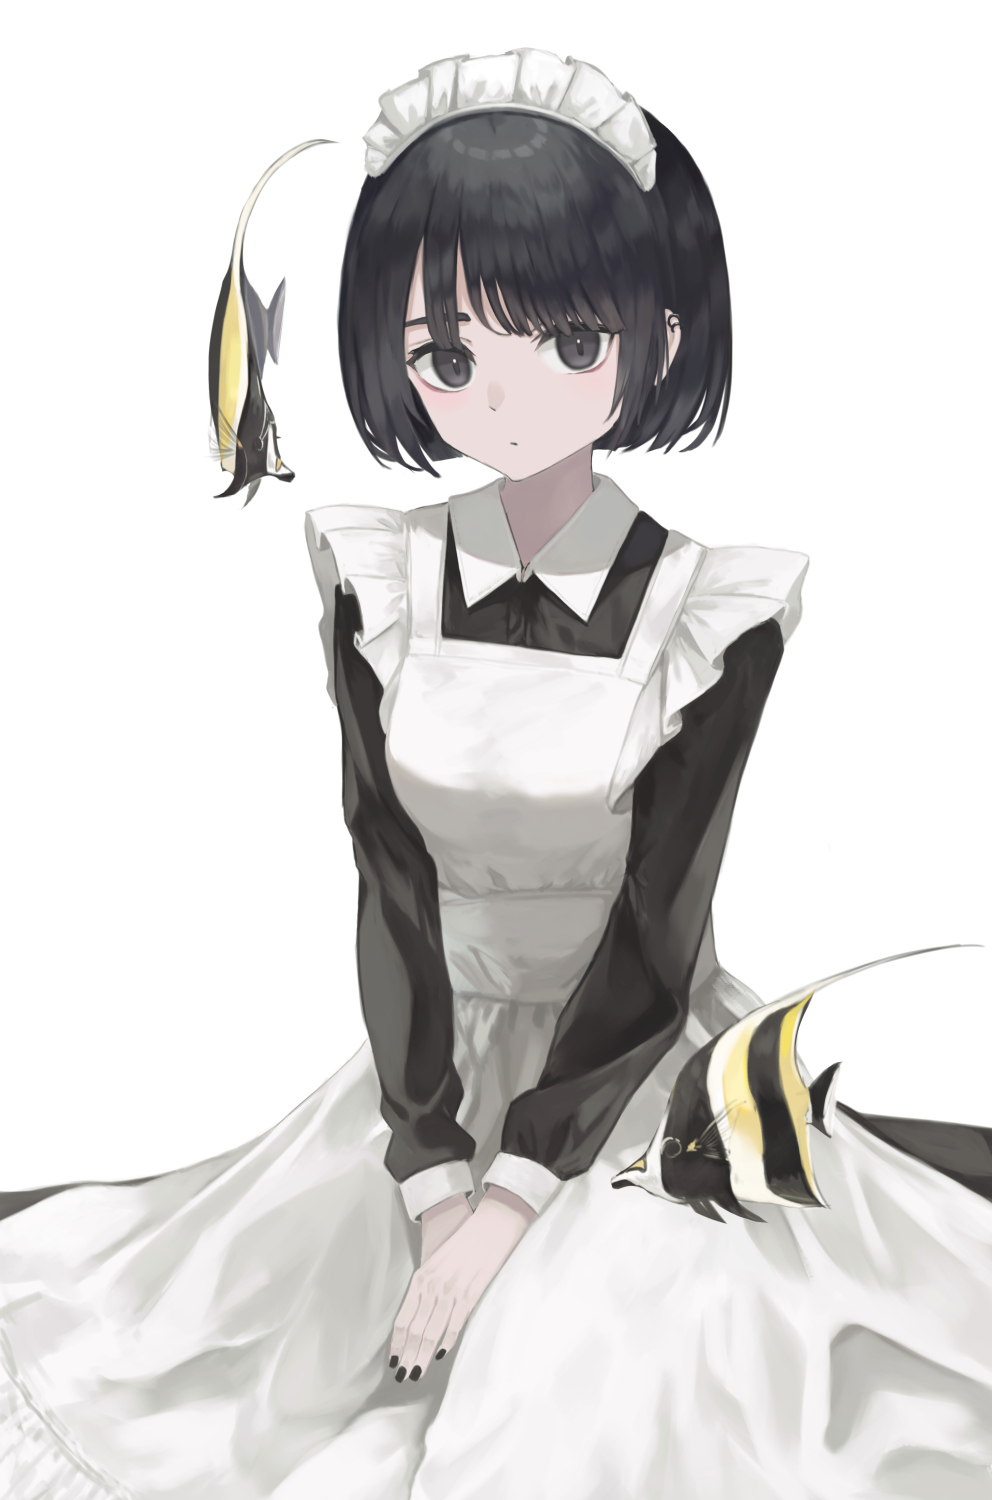 Anime 992x1500 anime anime girls digital art artwork 2D portrait display Ogami Ren maid outfit short hair black hair black eyes